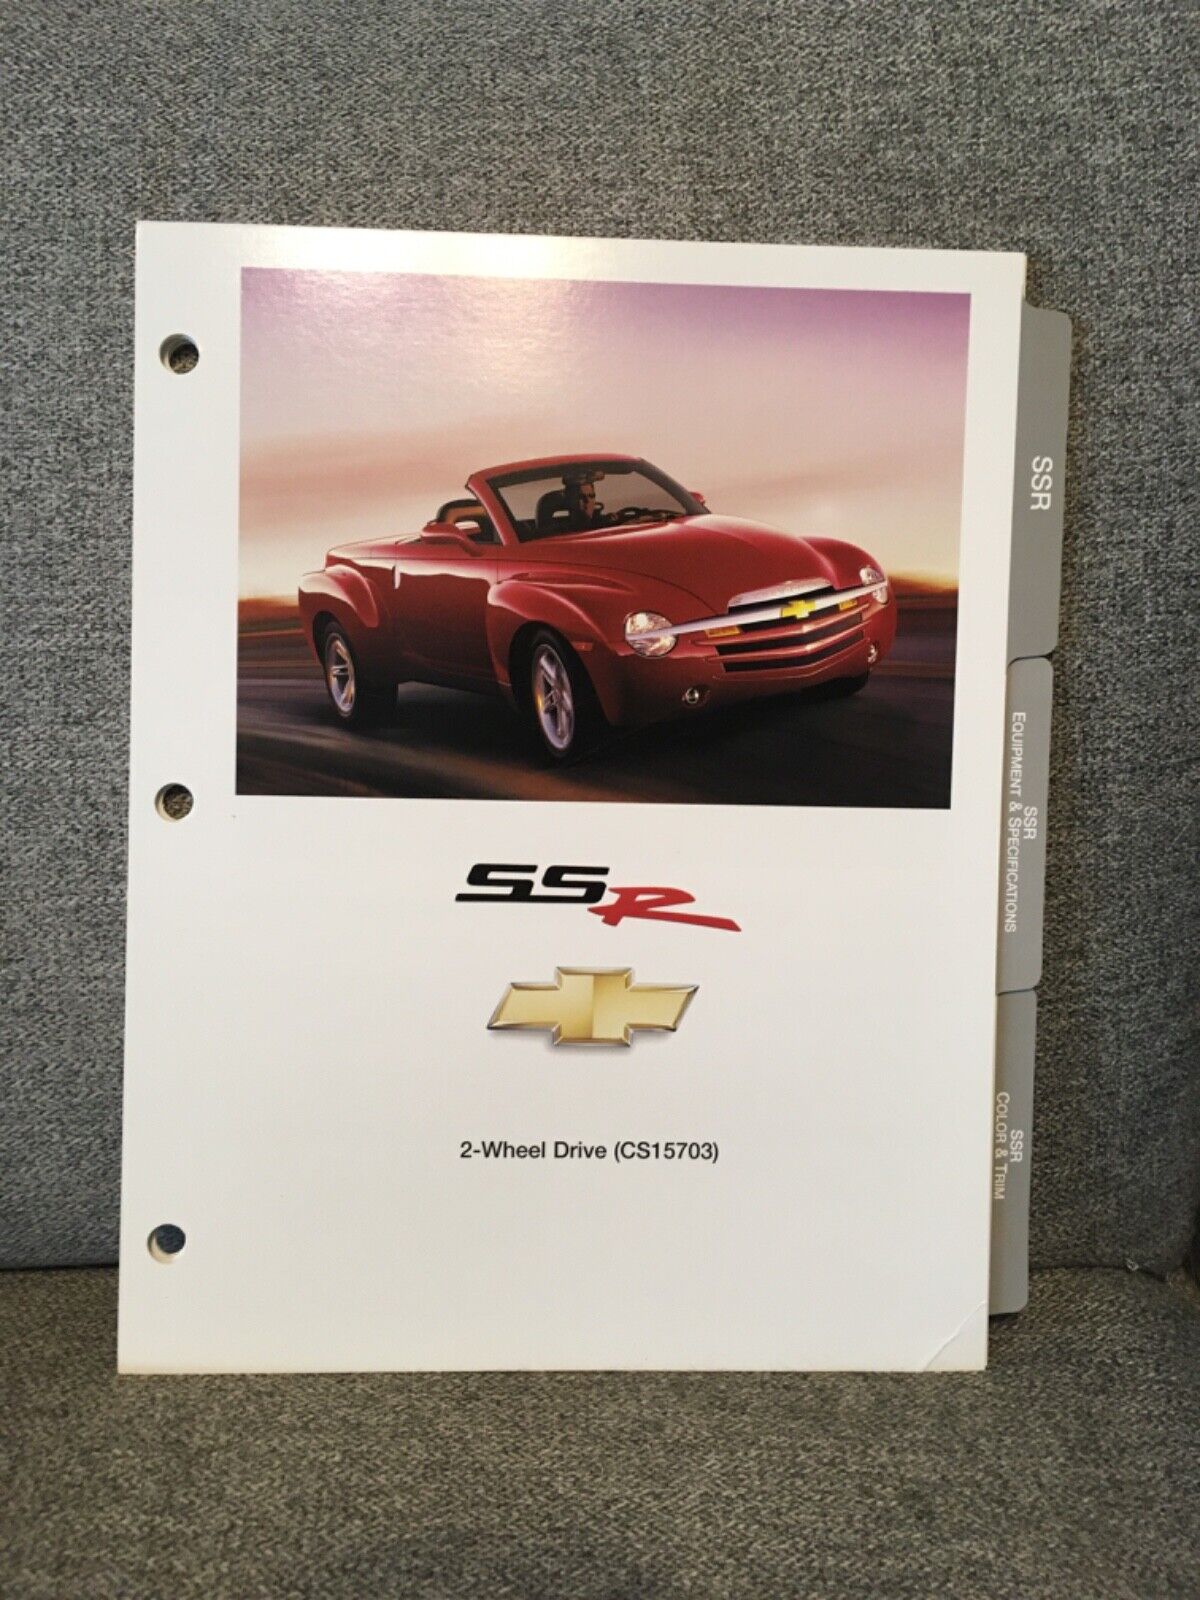 2004 Chevrolet SSR Product Portfolio Dealer Only Item Information,Specifications